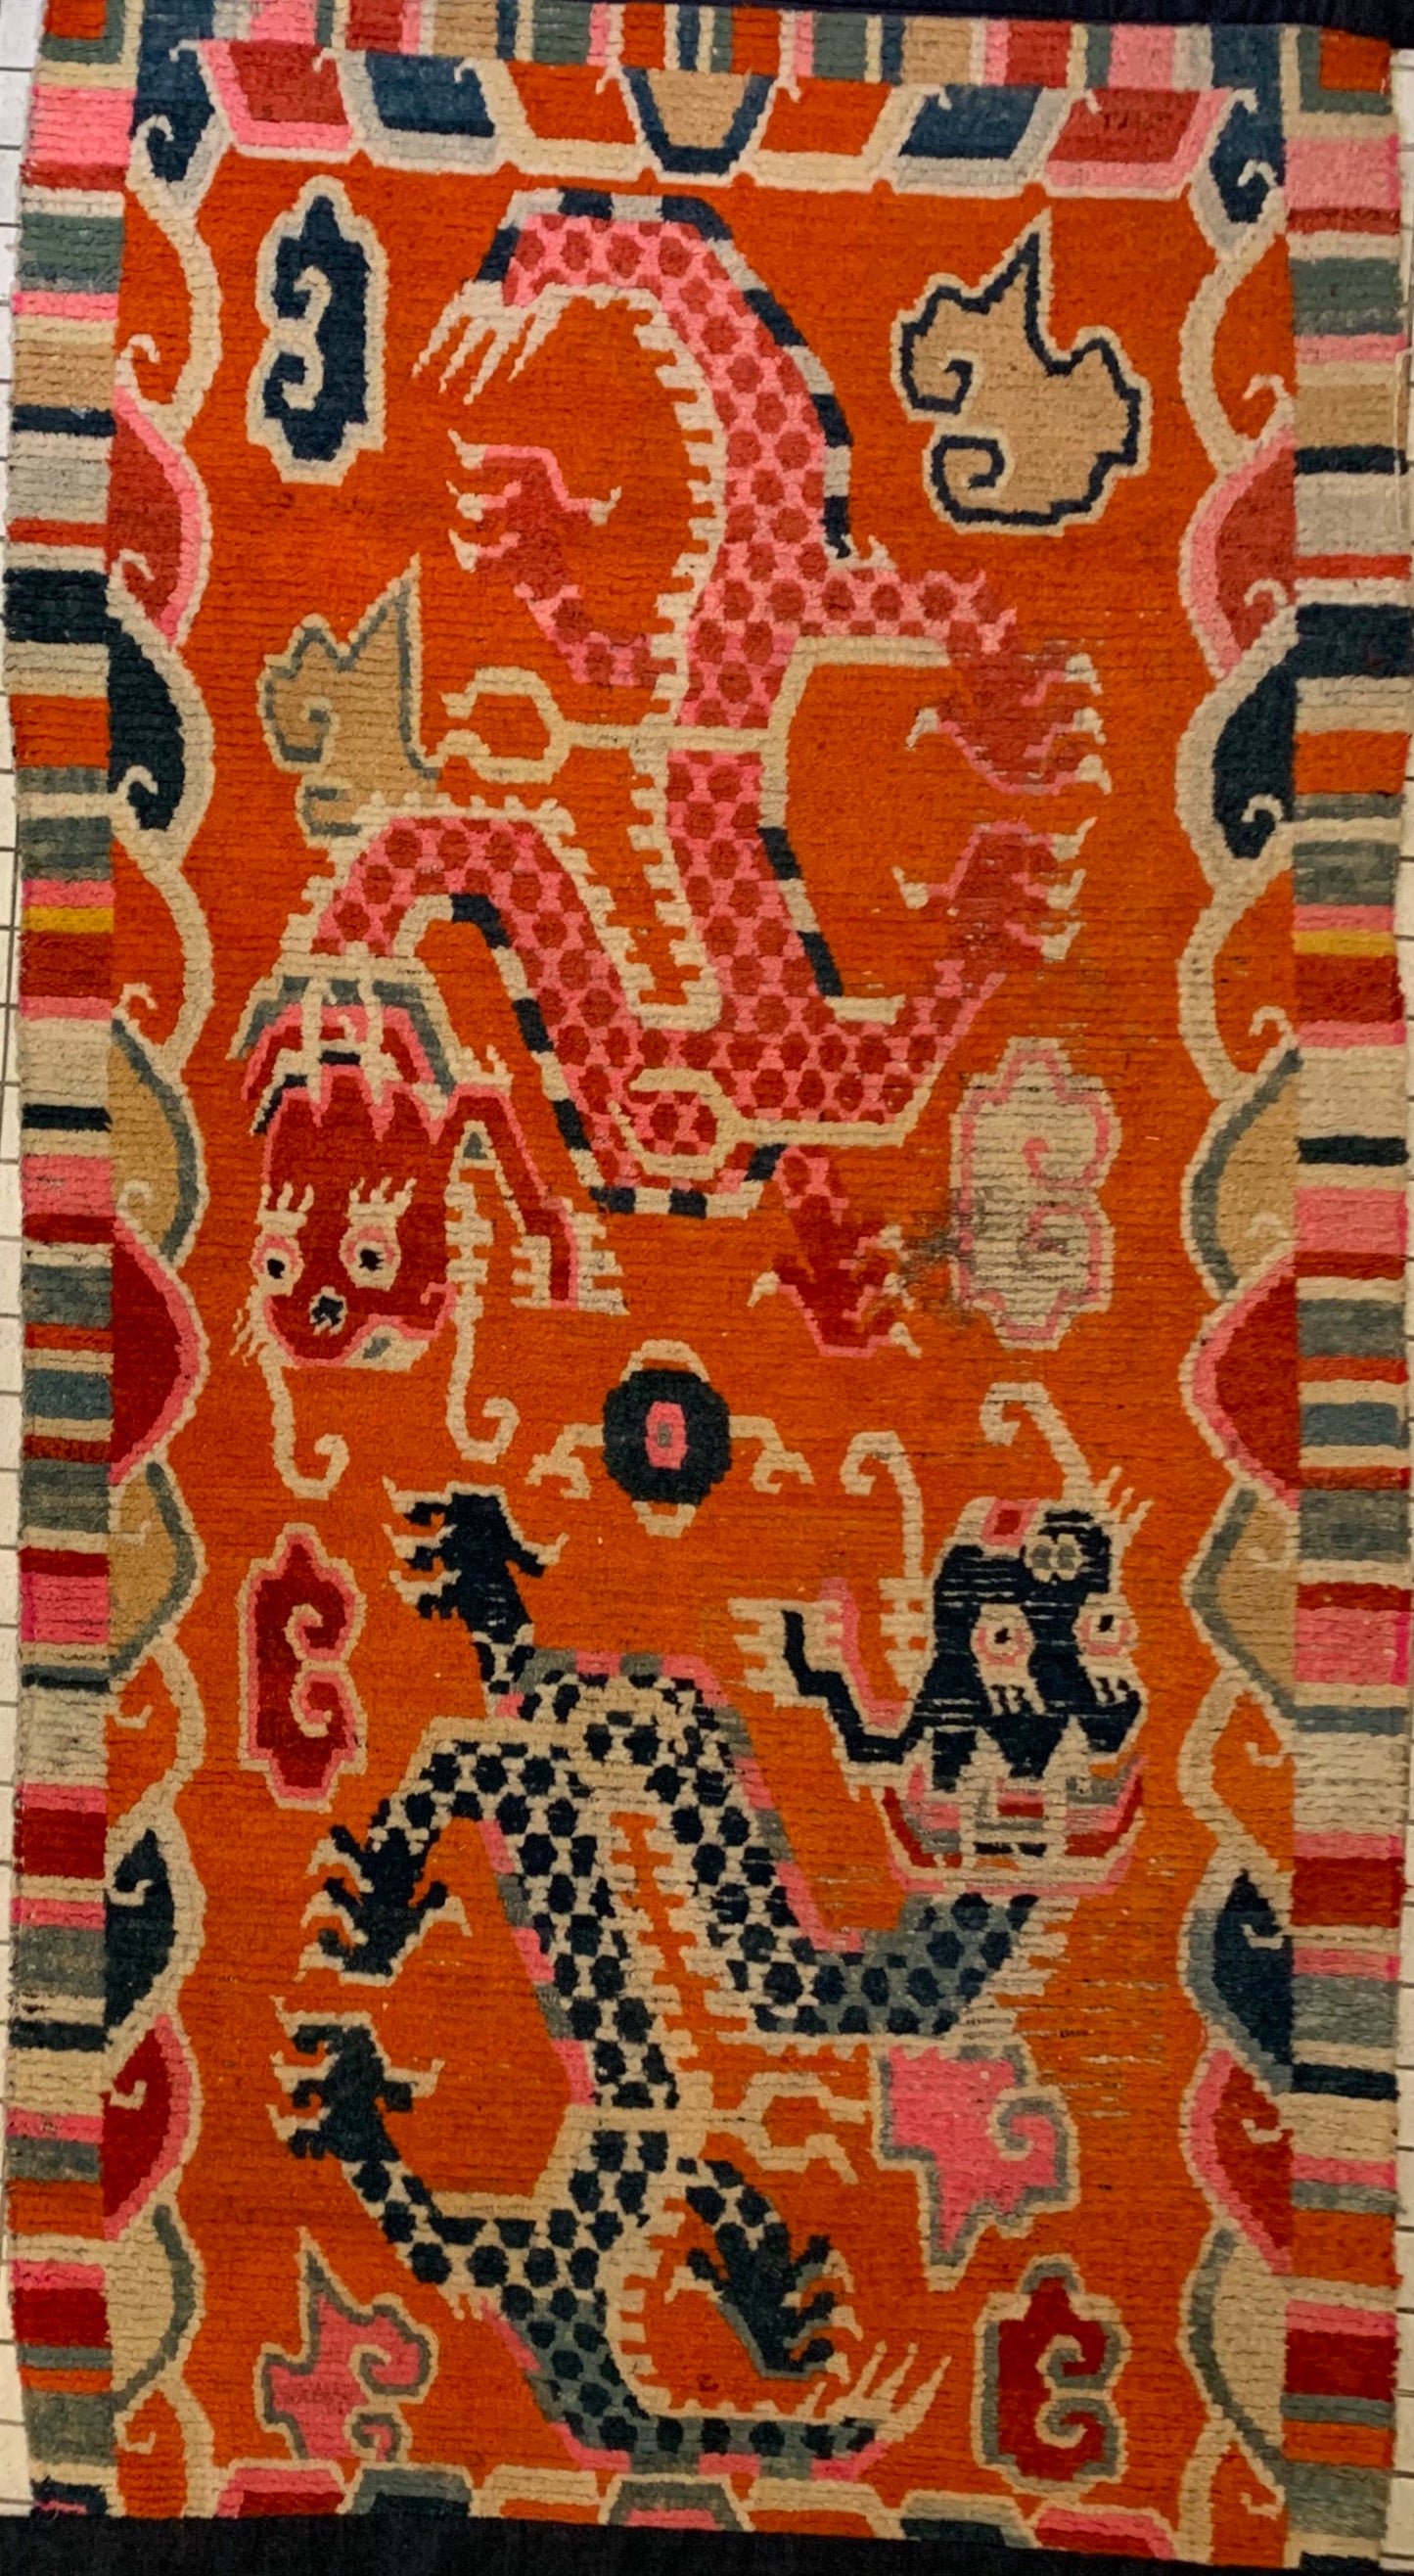 A 19th C., unique antique Tibetan dragon rug